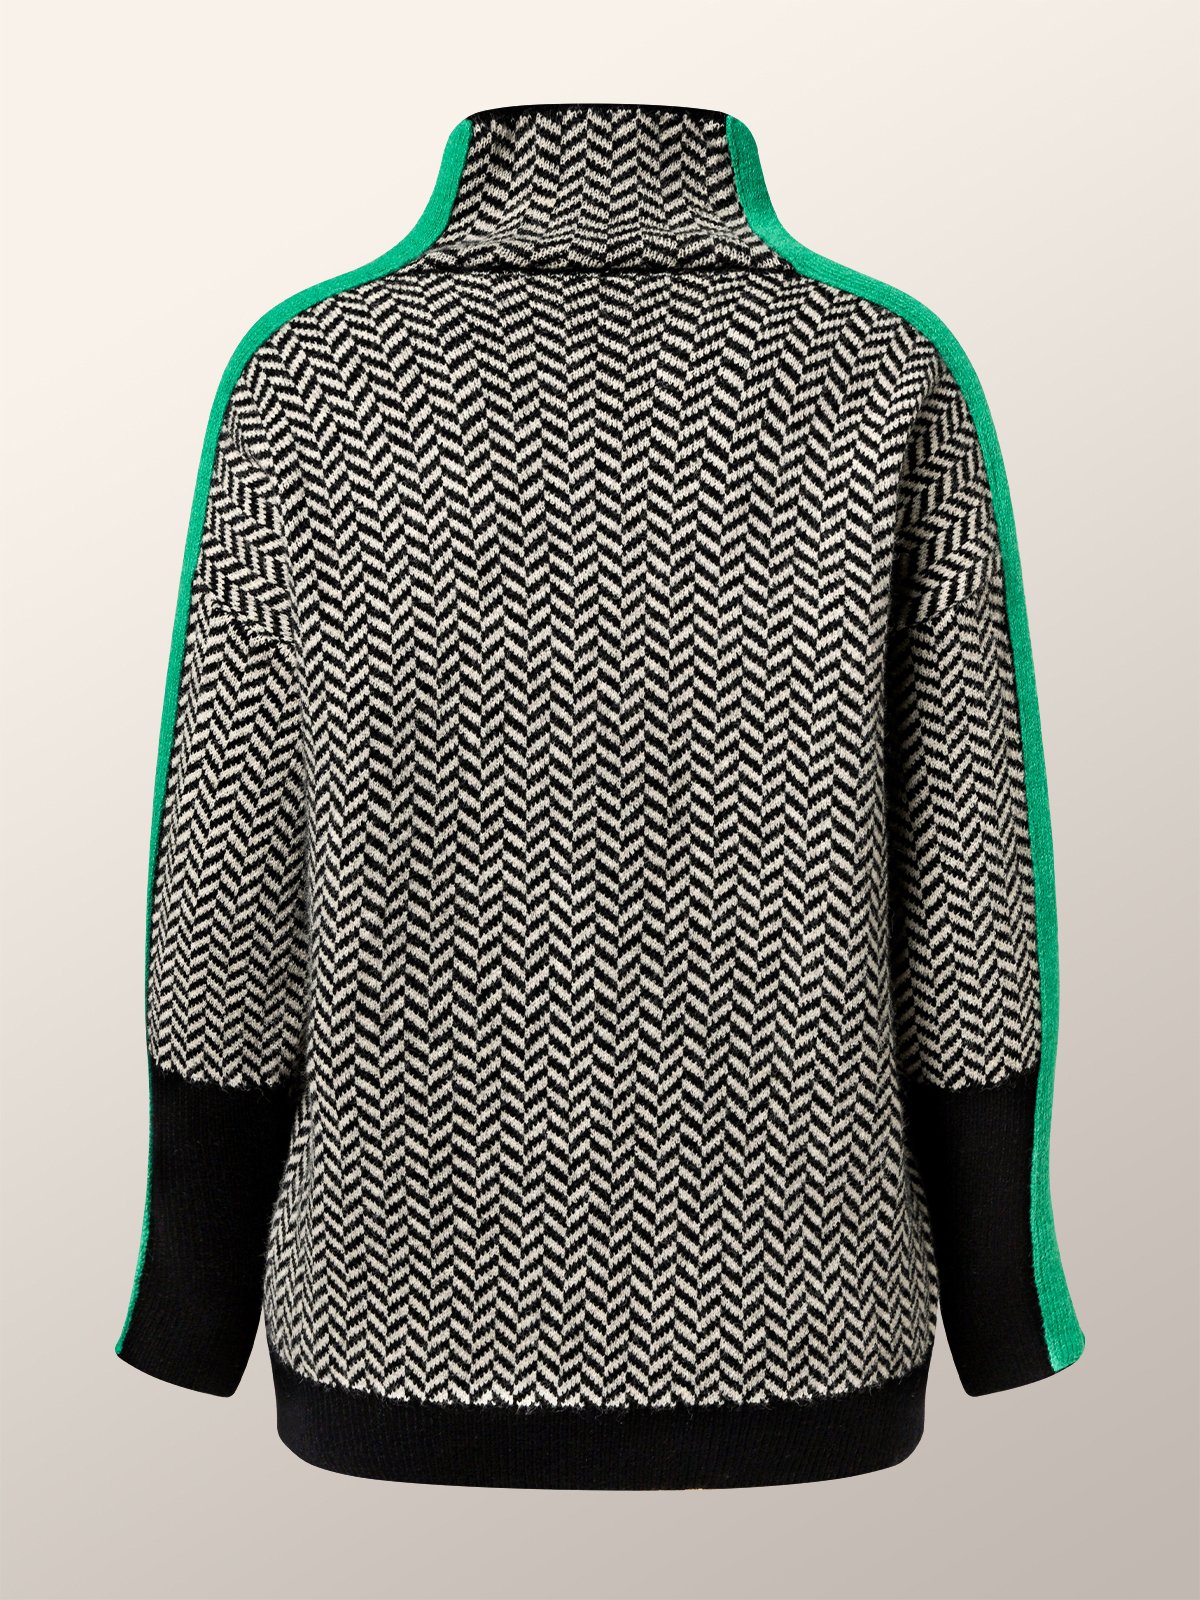 Urban Geometric Turtleneck Long Sleeve Sweater